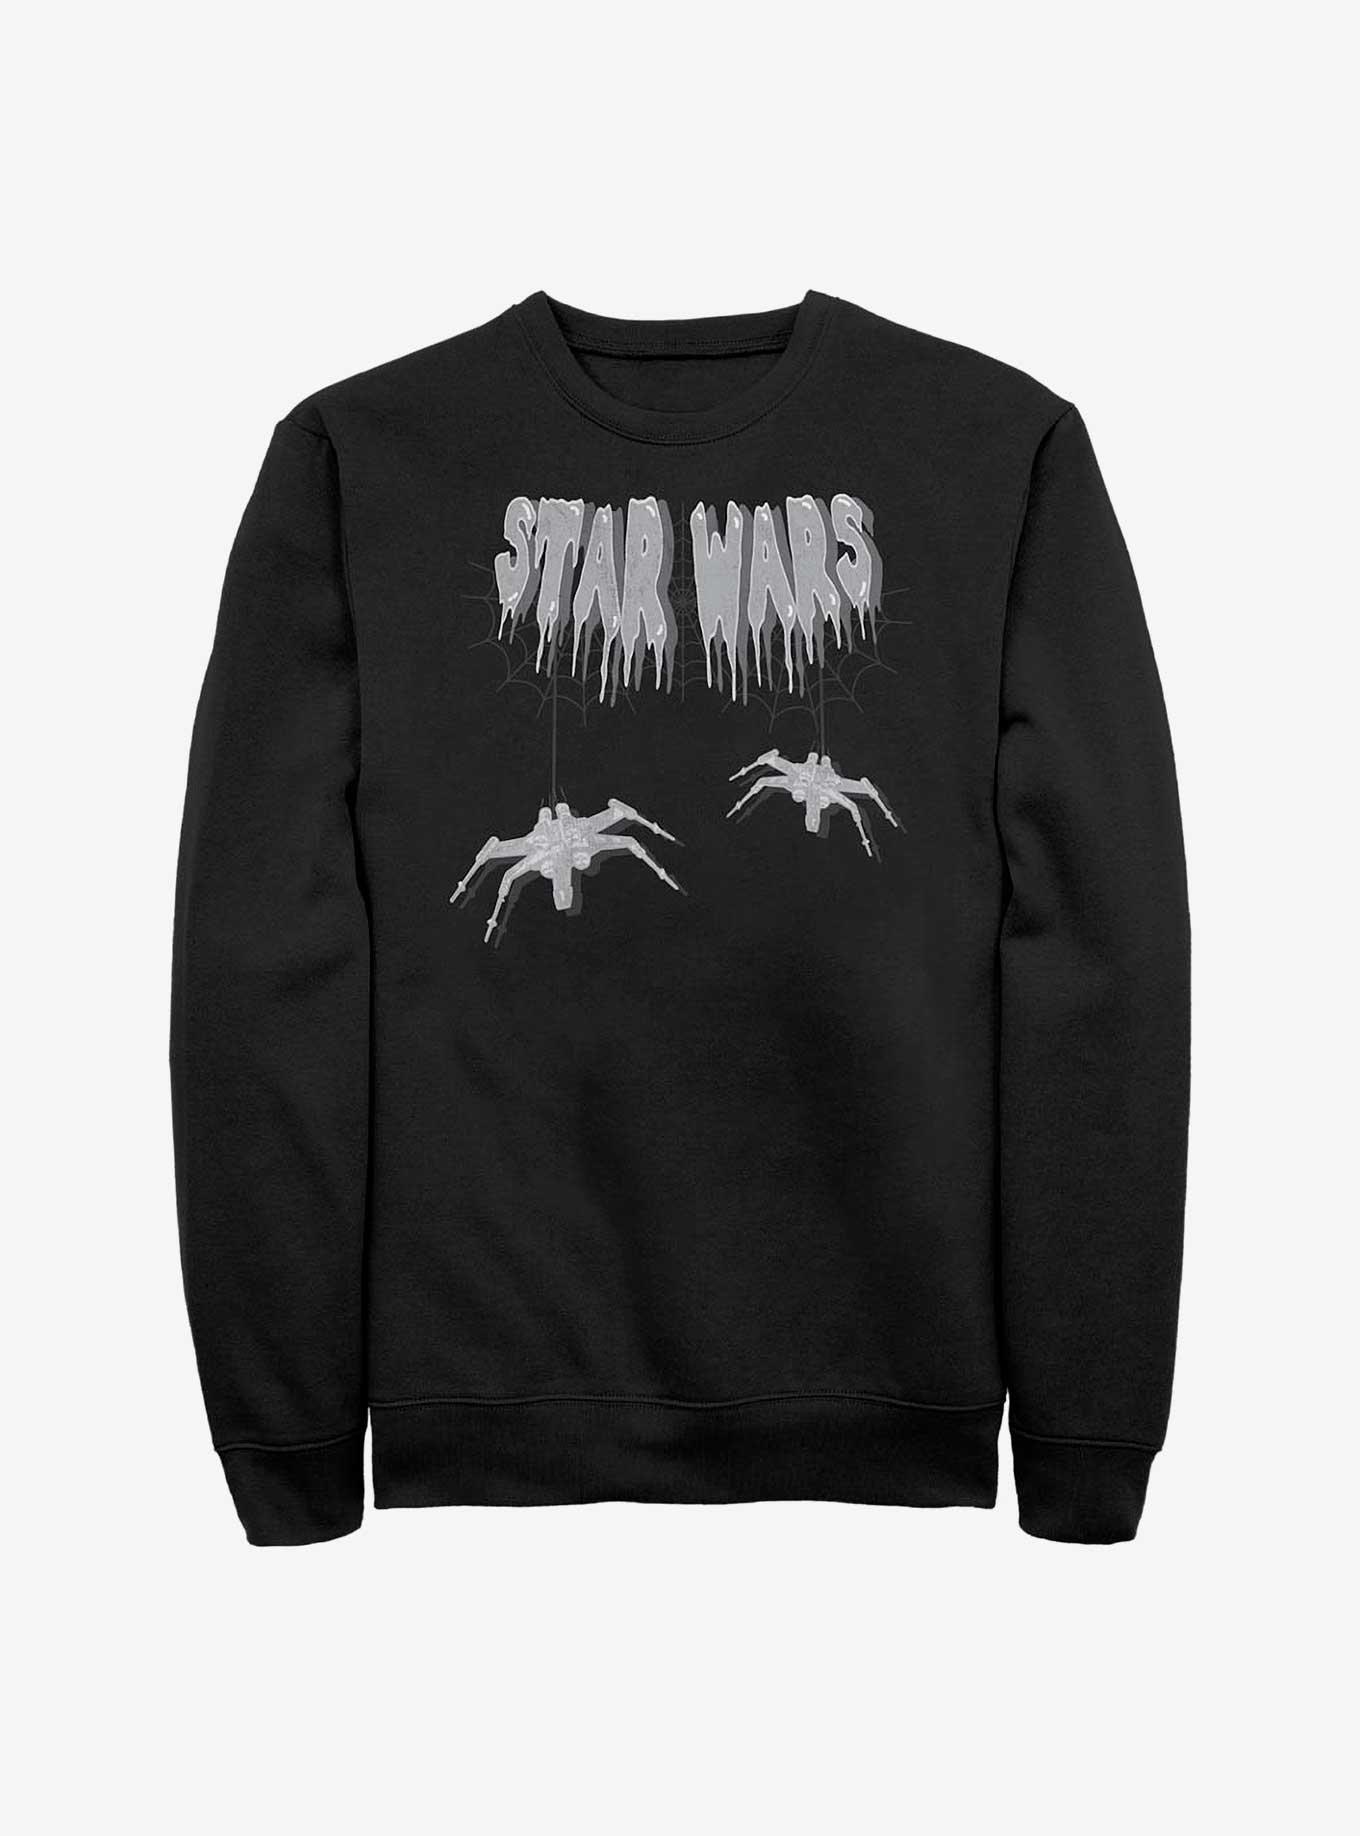 Star Wars Spooky Spiders X-Wing Logo Sweatshirt, BLACK, hi-res